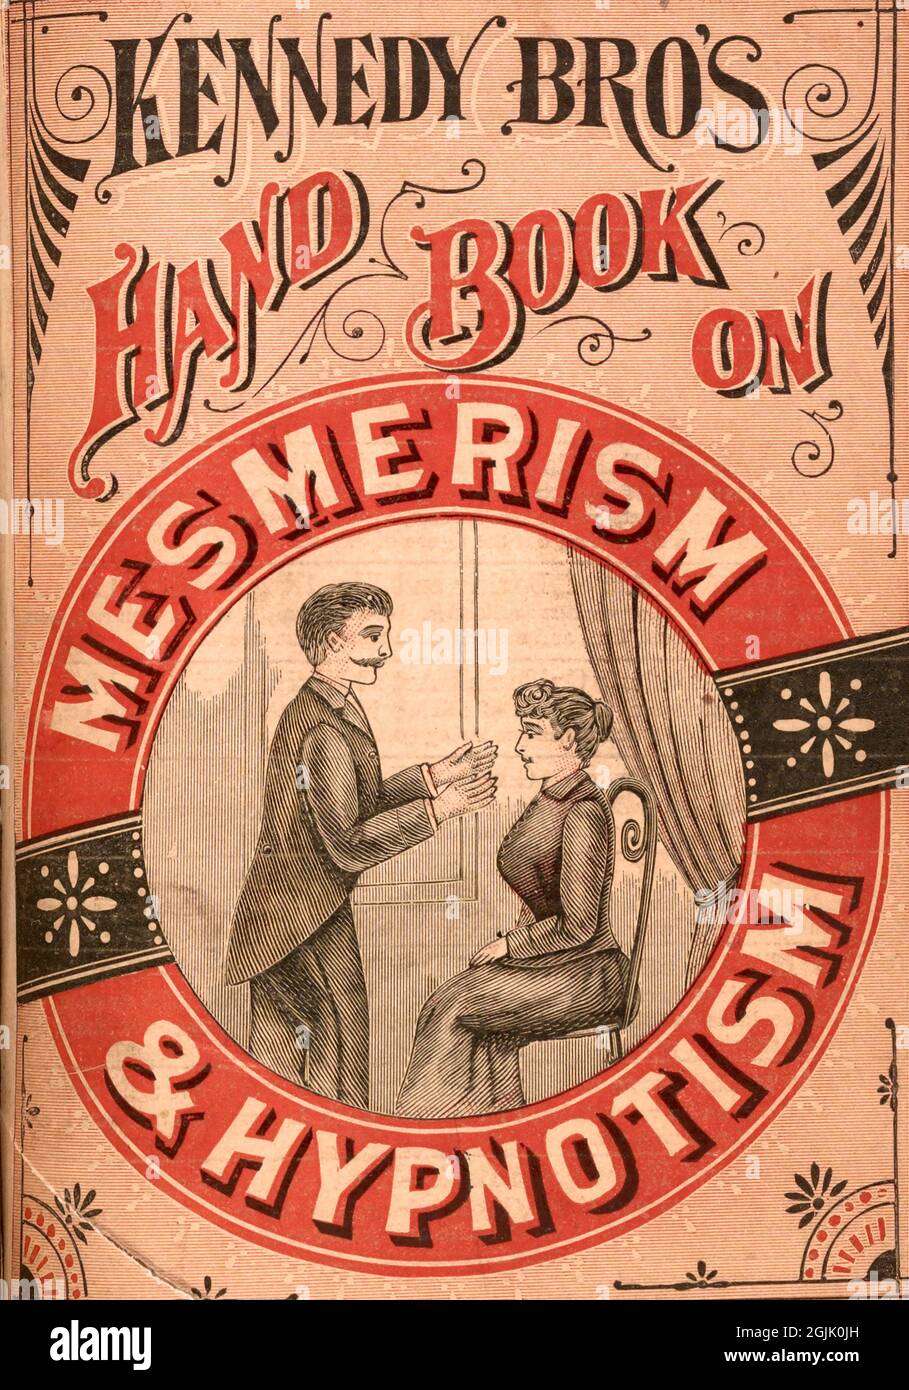 Kennedy Bros.' hand book on mesmerism & hypnotism 1883 Stock Photo